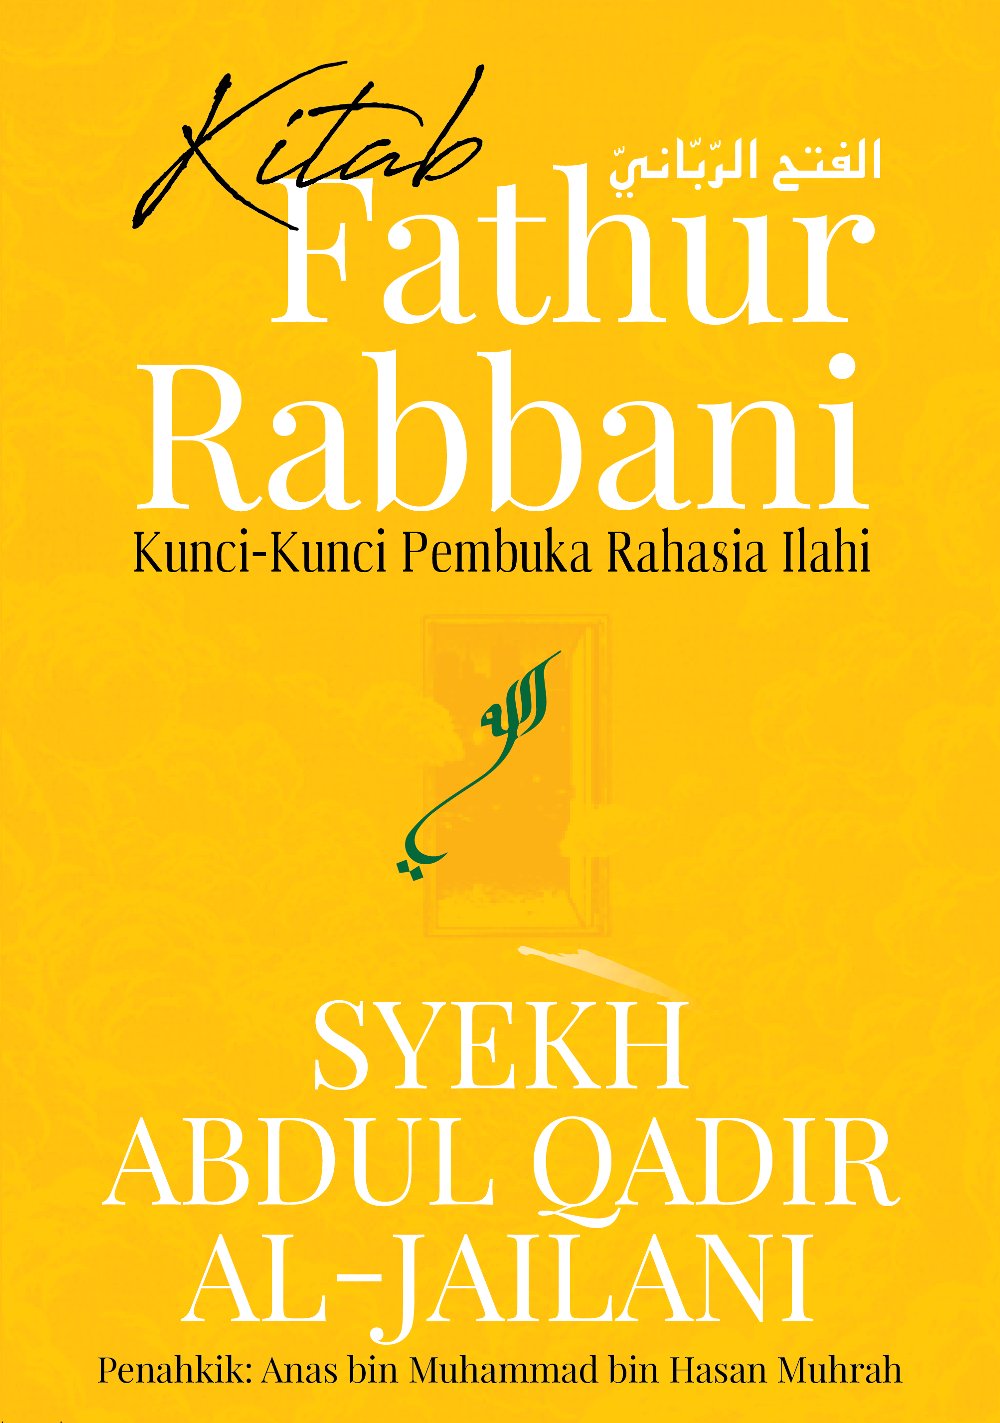 download terjemahan kitab fathur rabbani pdf